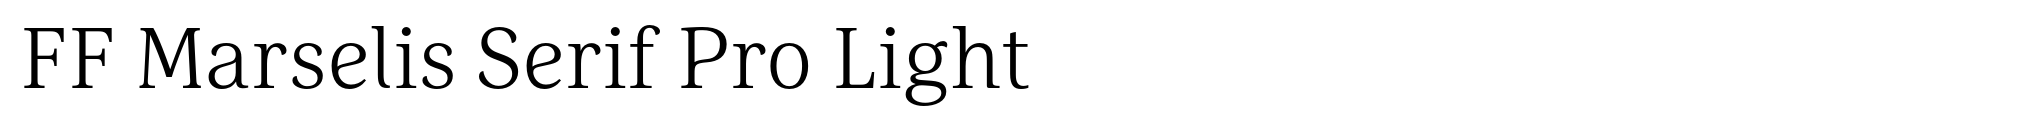 FF Marselis Serif Pro Light image